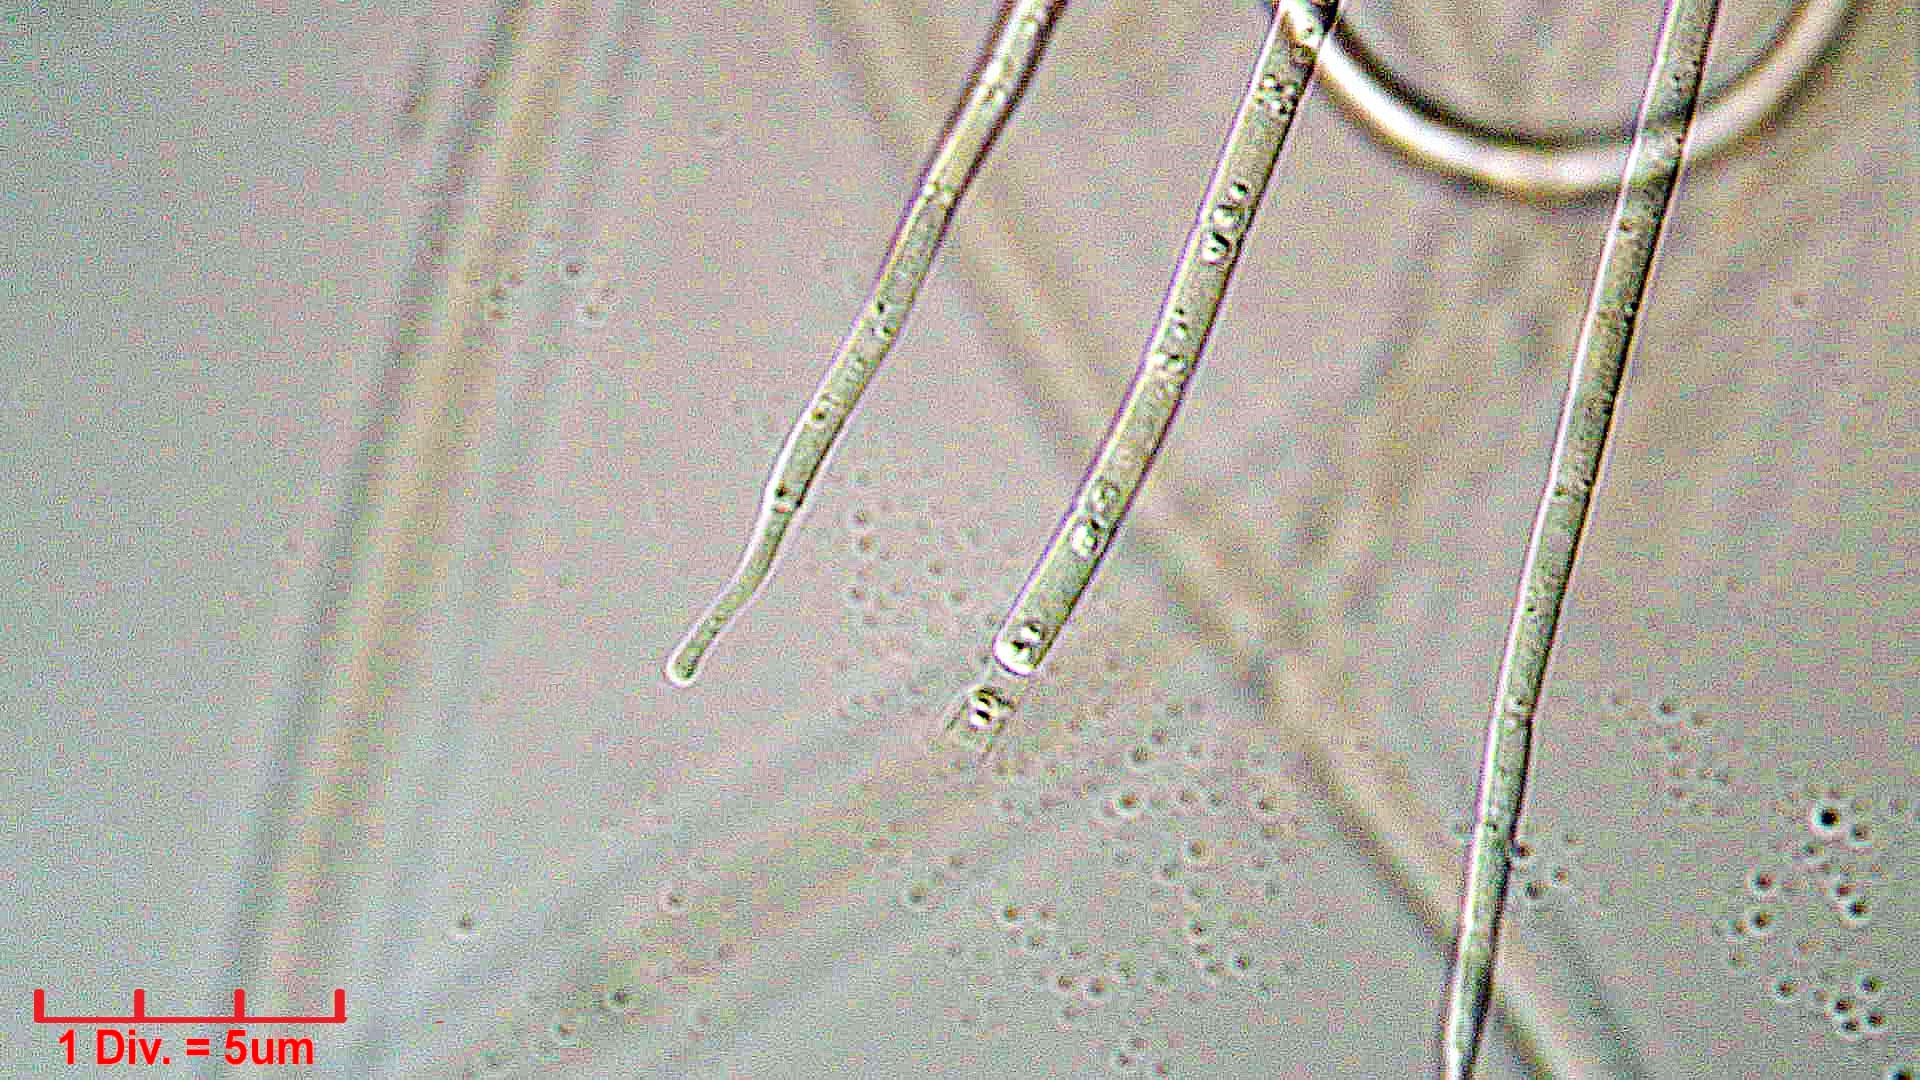 ./Cyanobacteria/Oscillatoriales/Coleofasciculaceae/Geitlerinema/splendidum/geitlerinema-splendidum-294.jpg